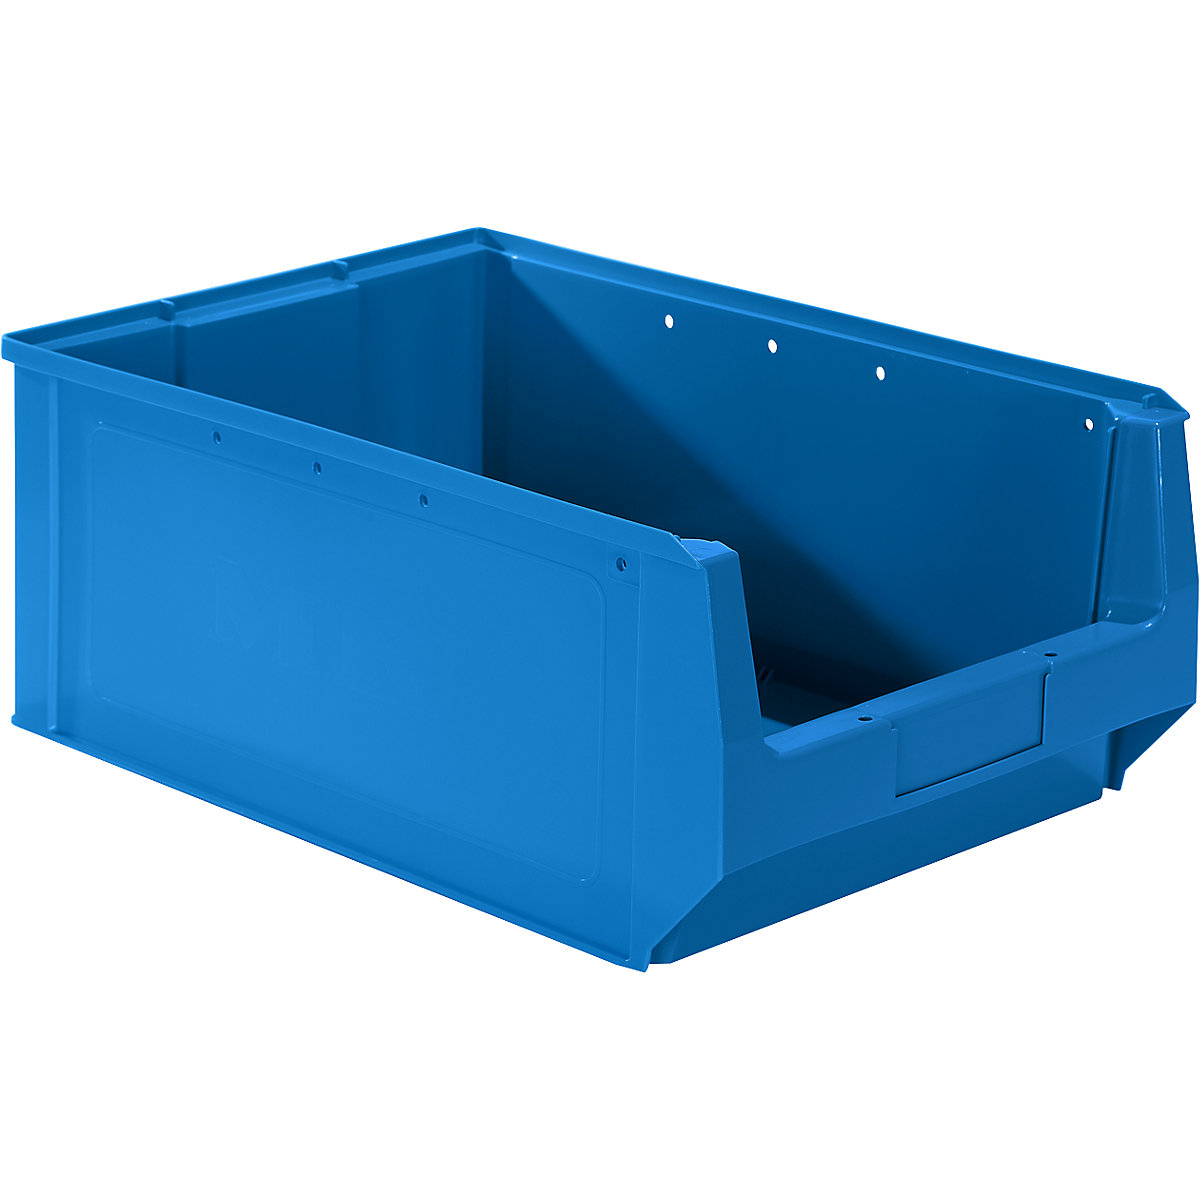 Open fronted storage bin made of polyethylene - mauser